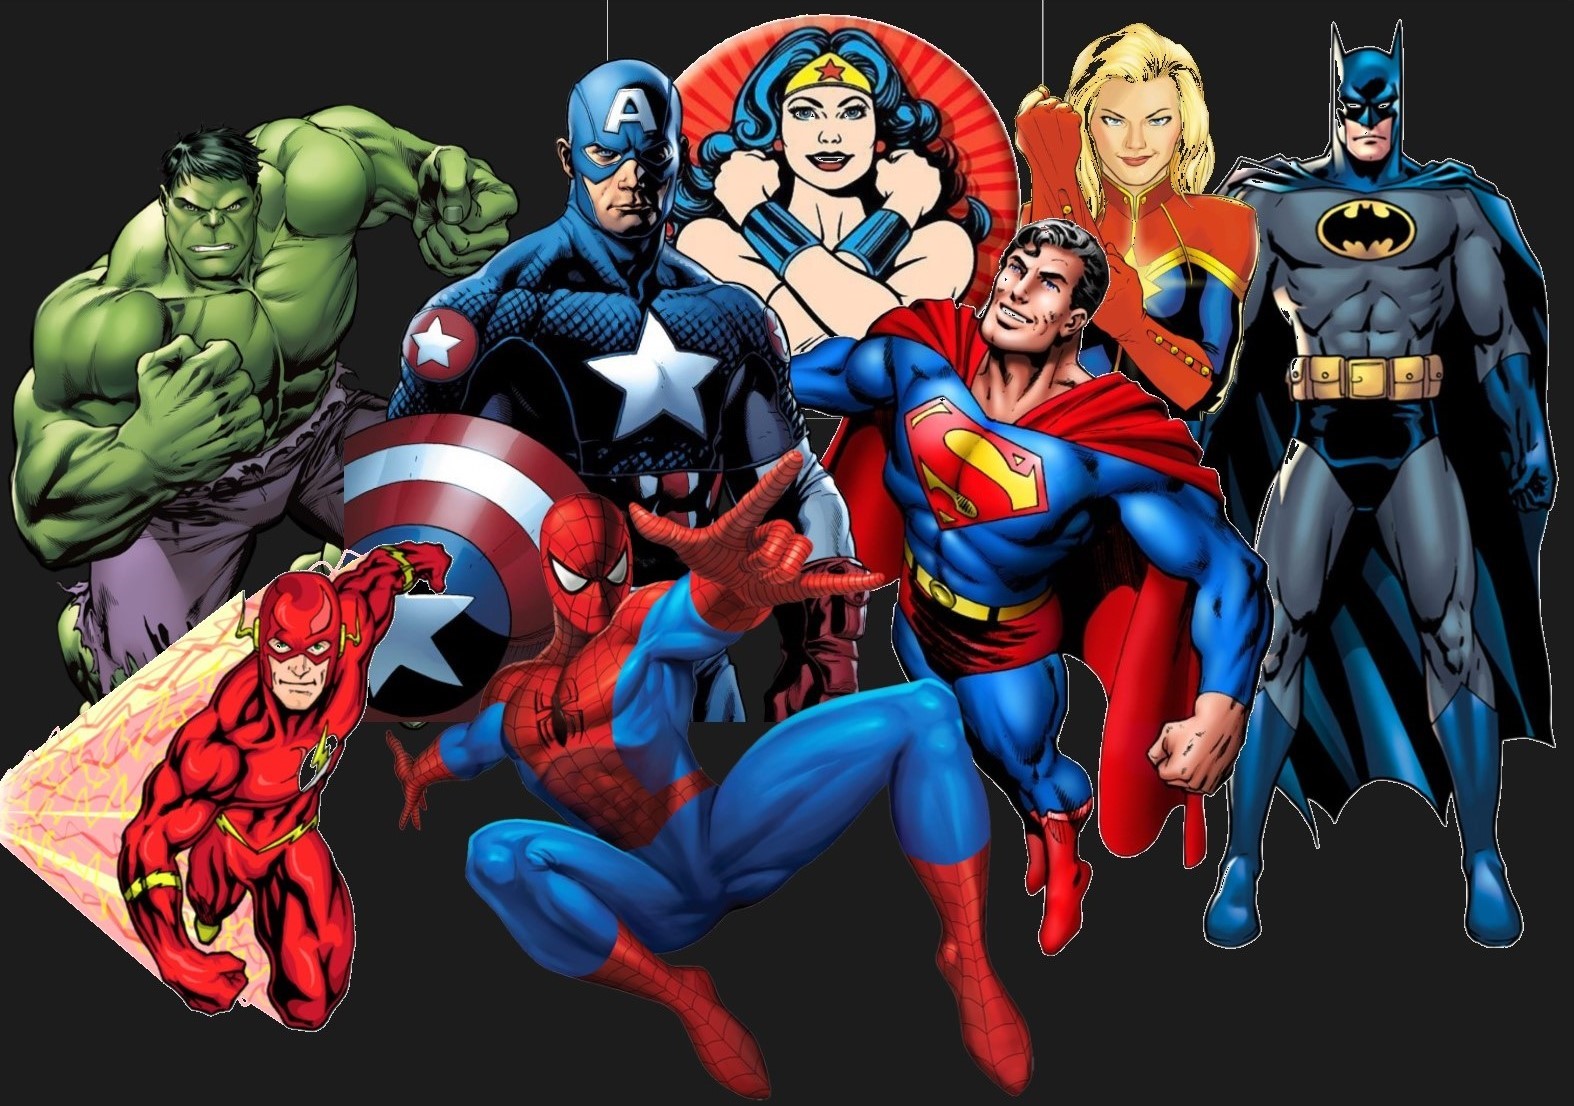 Is super heroes. Супергерои. Супергерои Марвел. Marvel герои. Картинки супергероев.